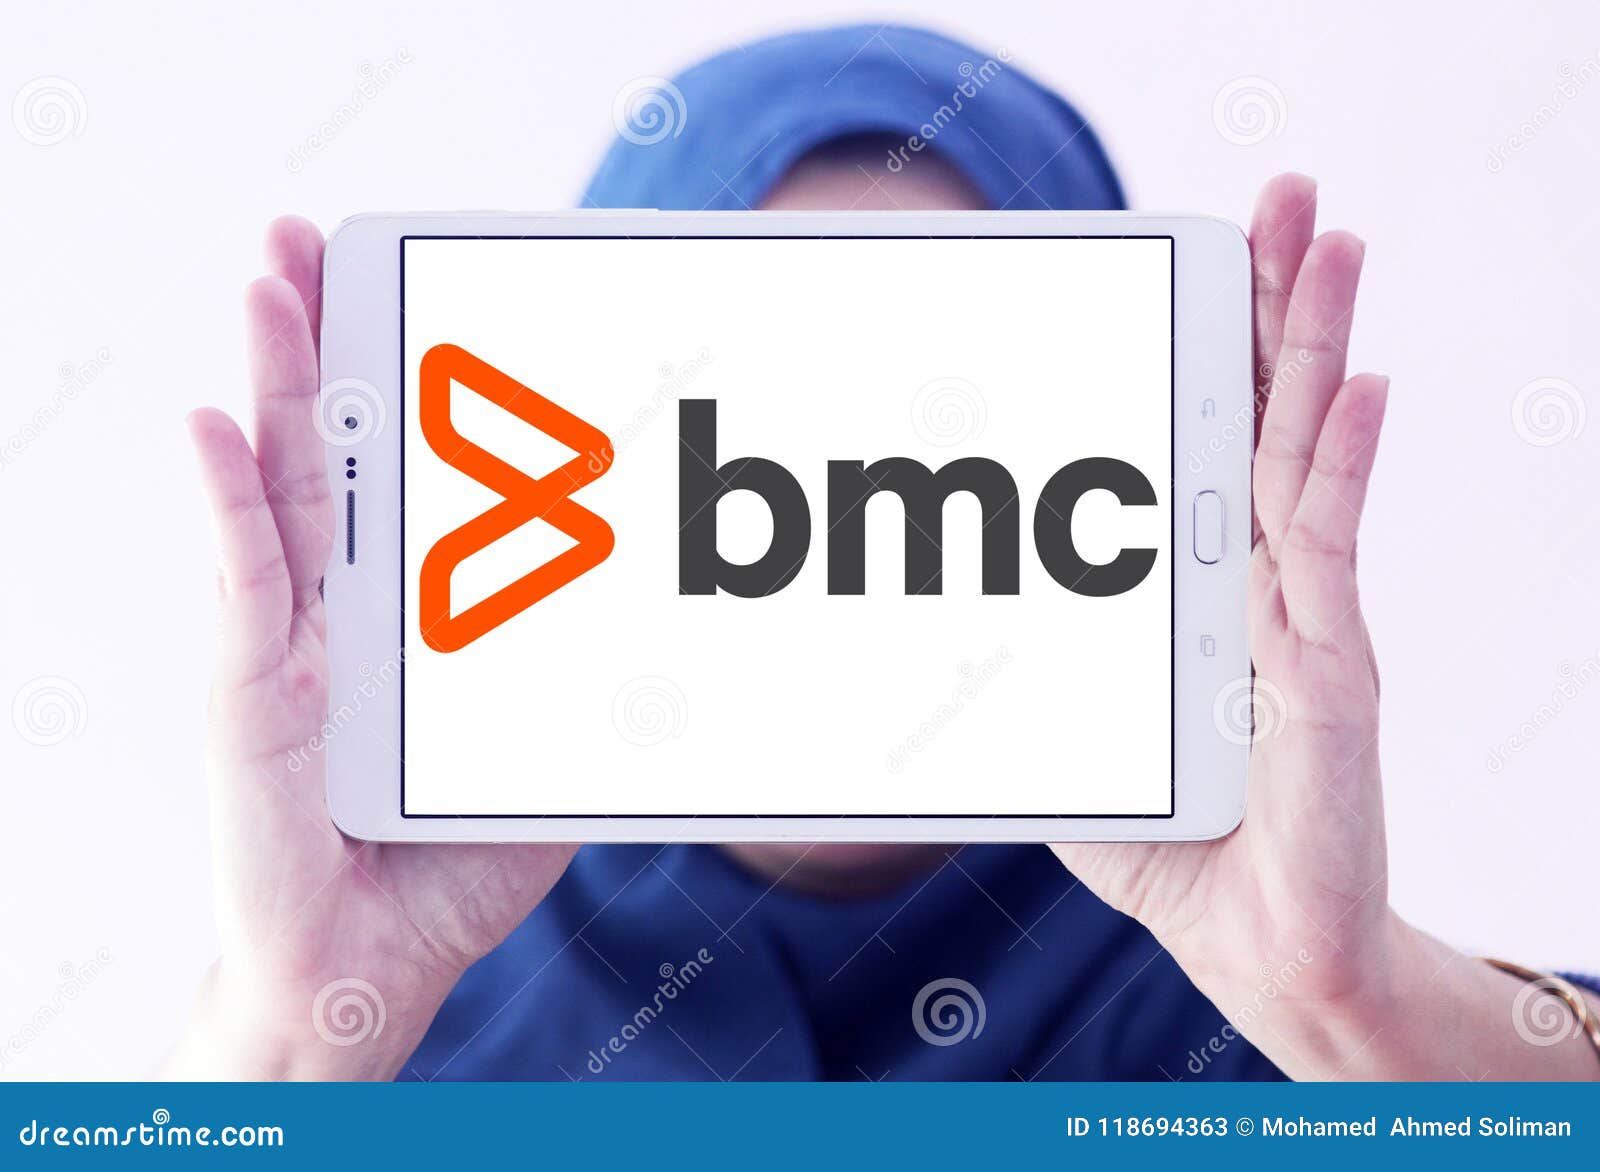 File:BMC Logo 2021.jpg - Wikipedia